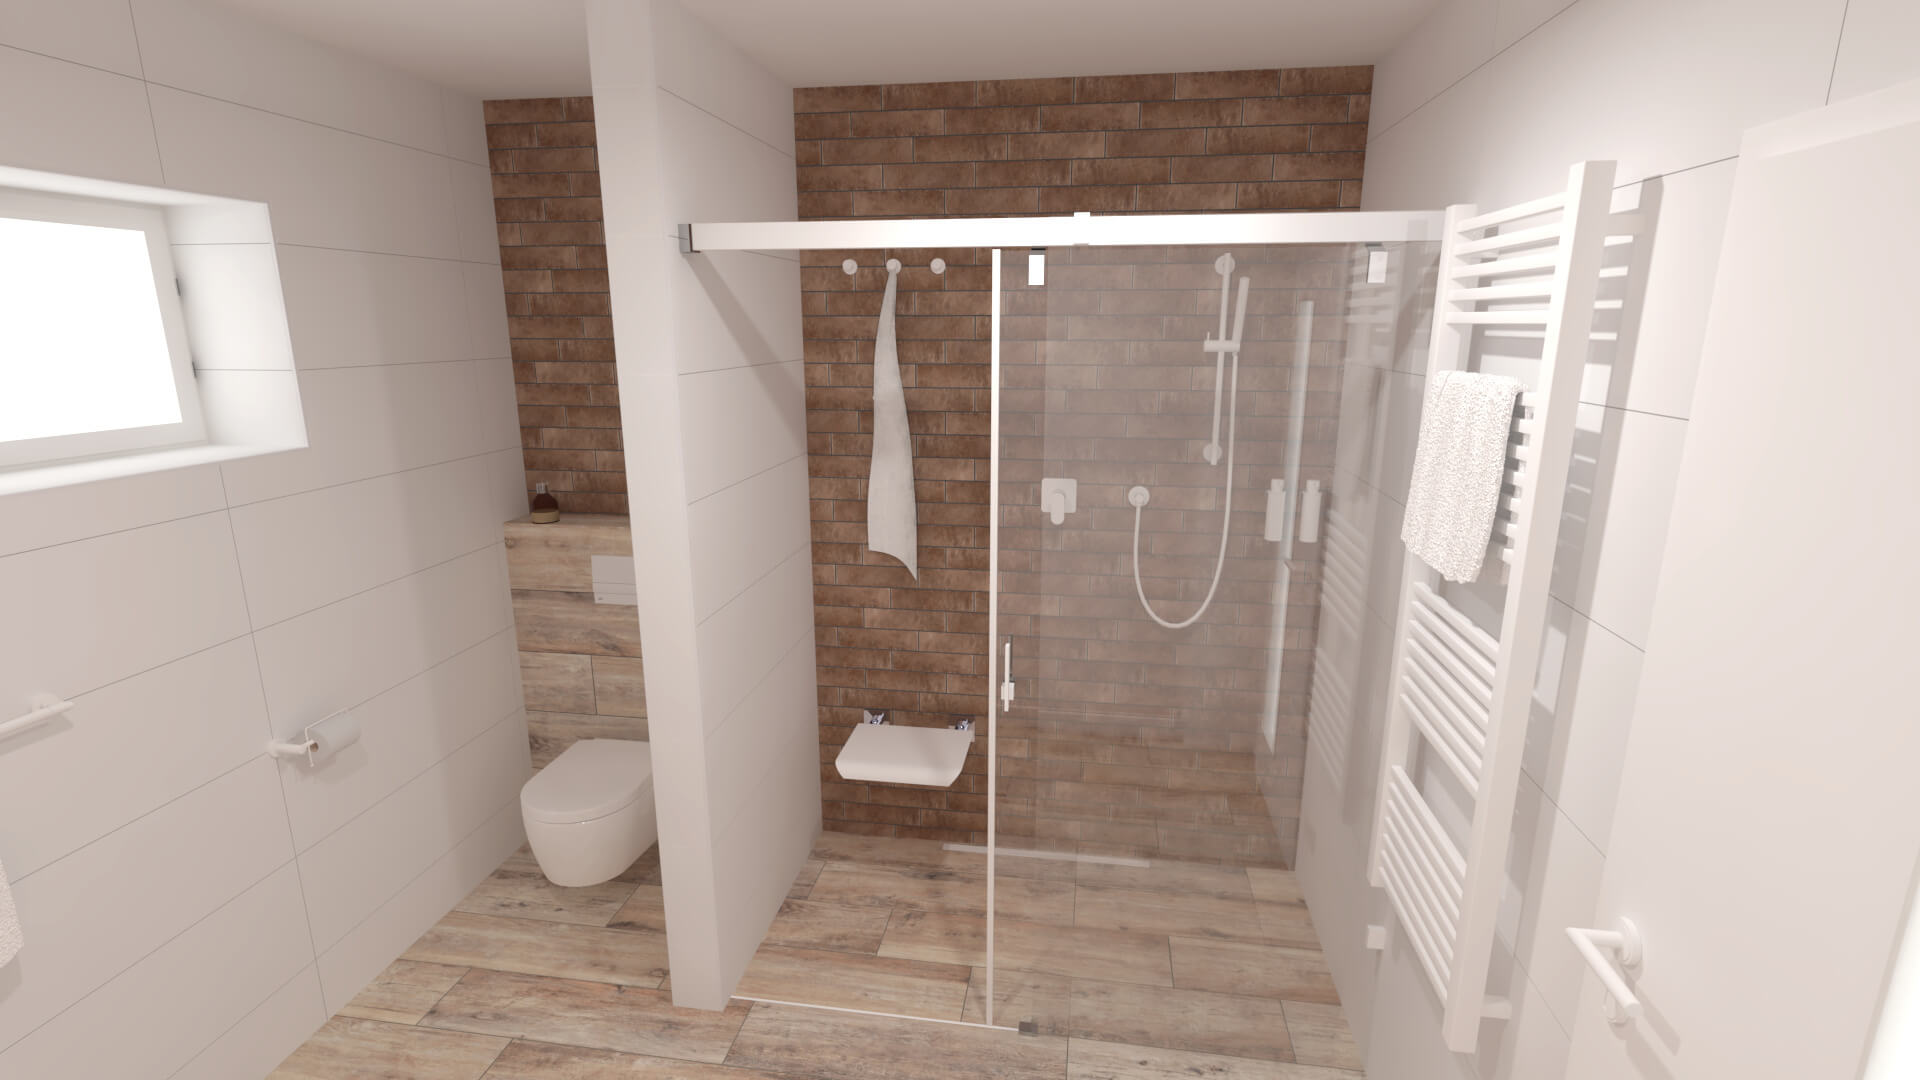 Vizualizace koupelny s keramickým obkladem ze série Planches de Rex a Brick